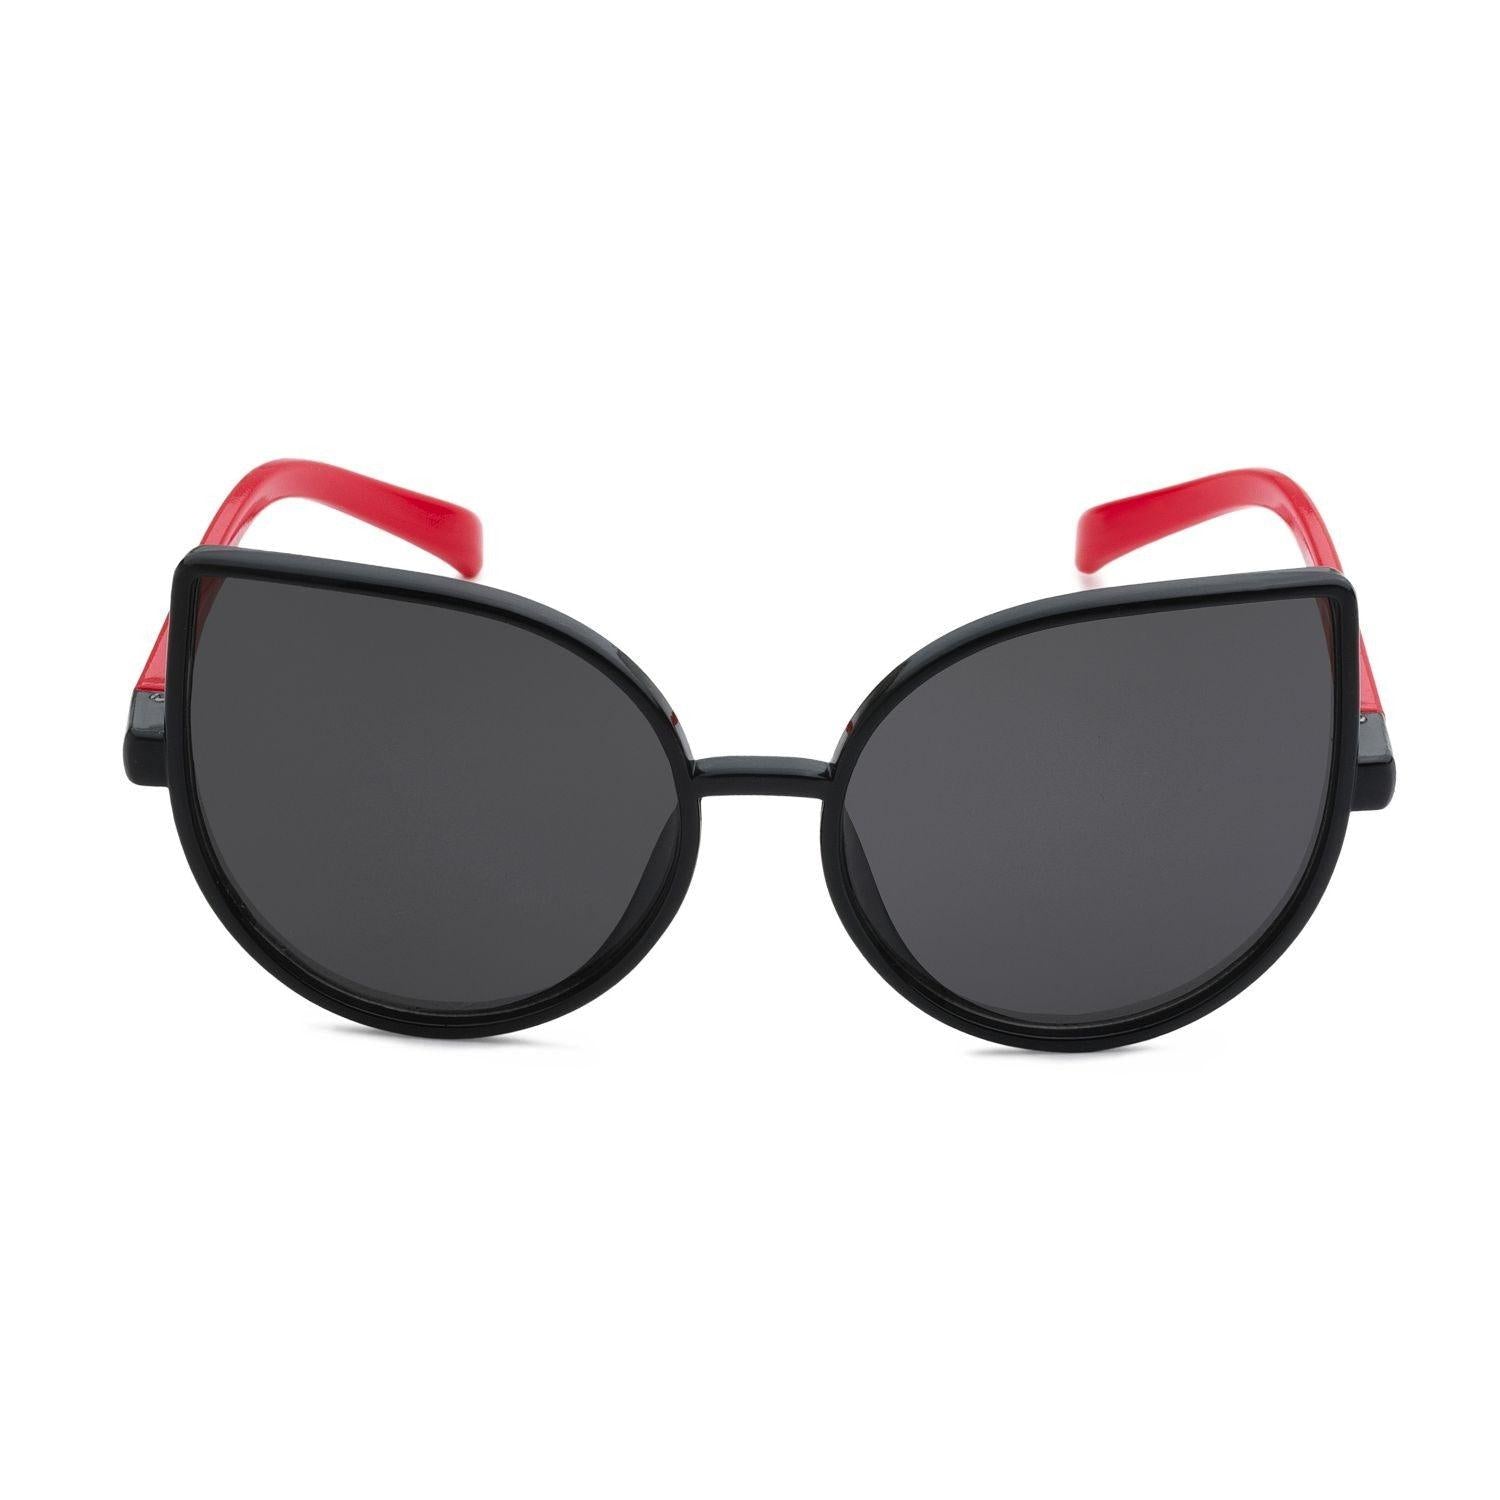 "Sunnie" Kids Cat Eye Sunglasses - Weekend Shade Sunglasses